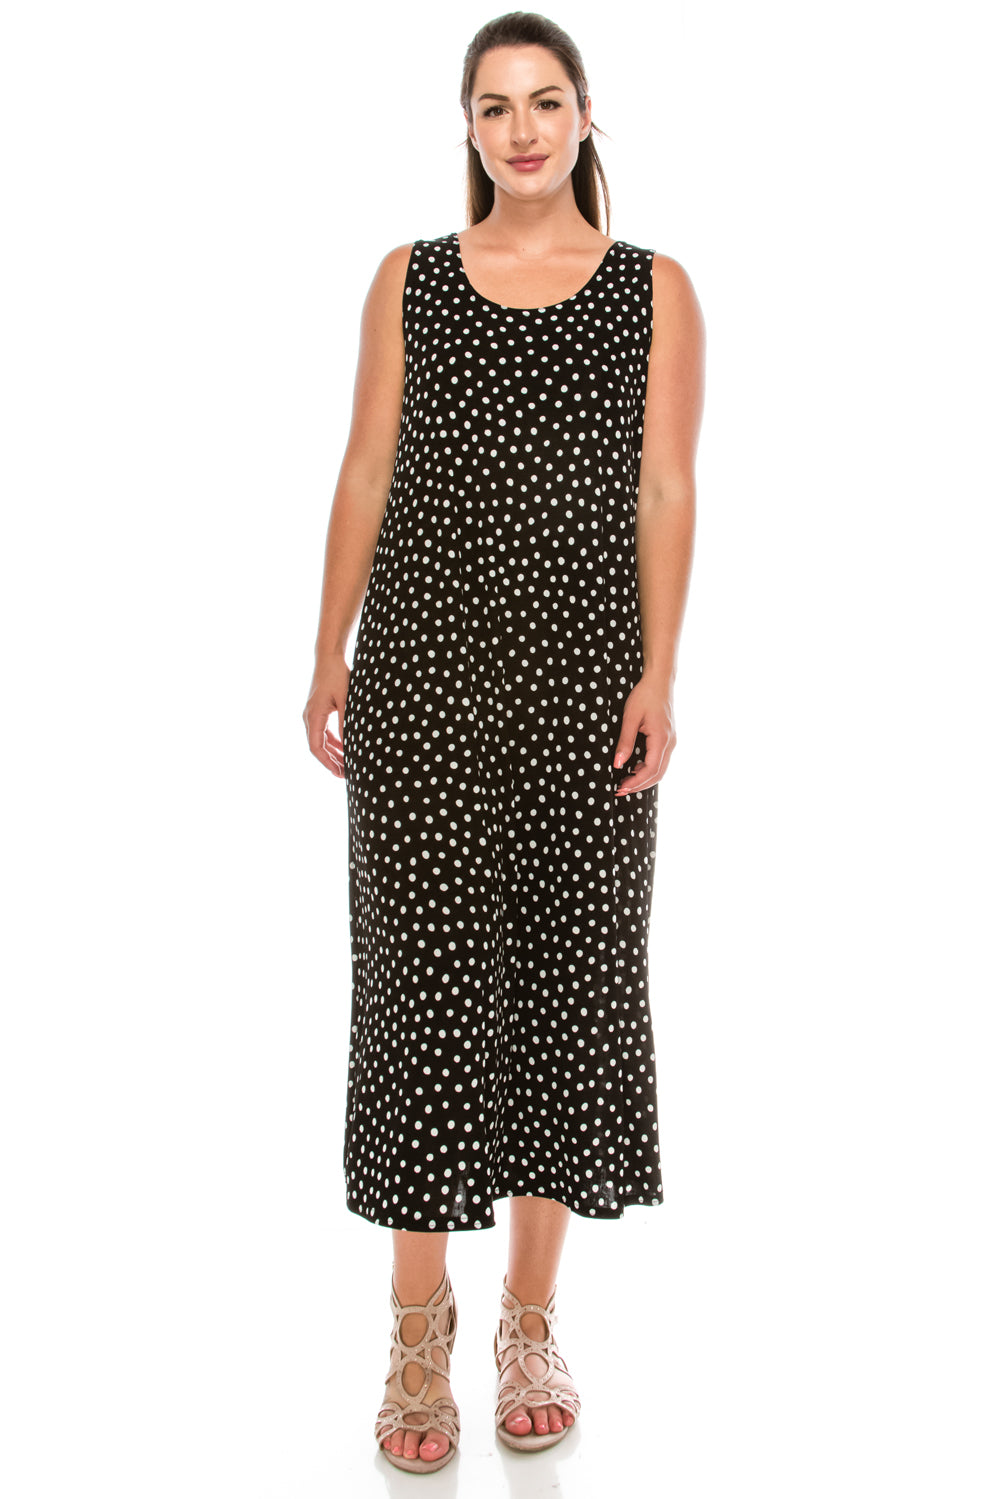 Jostar Women's Stretchy Long Tank Dress Print, 700BN-TP-W032 - Jostar Online